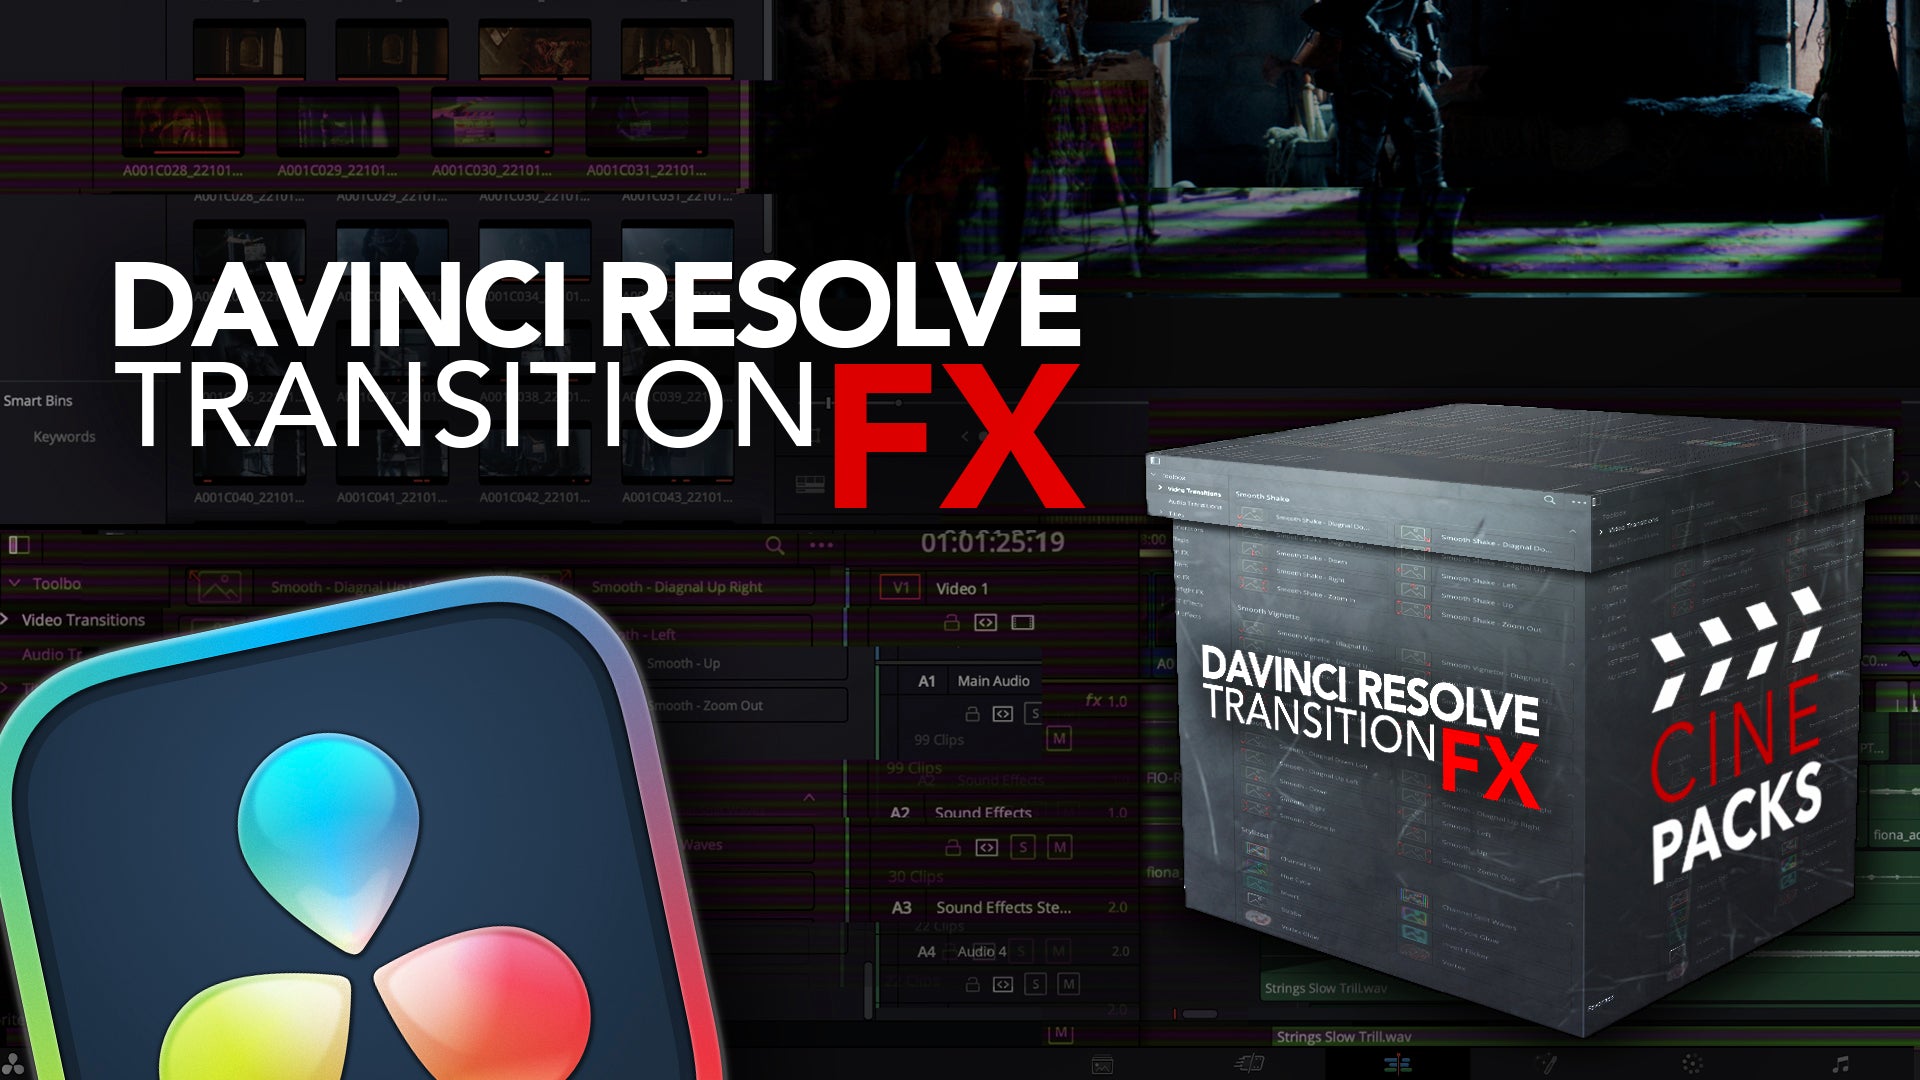 DaVinci Resolve Transition FX - CinePacks